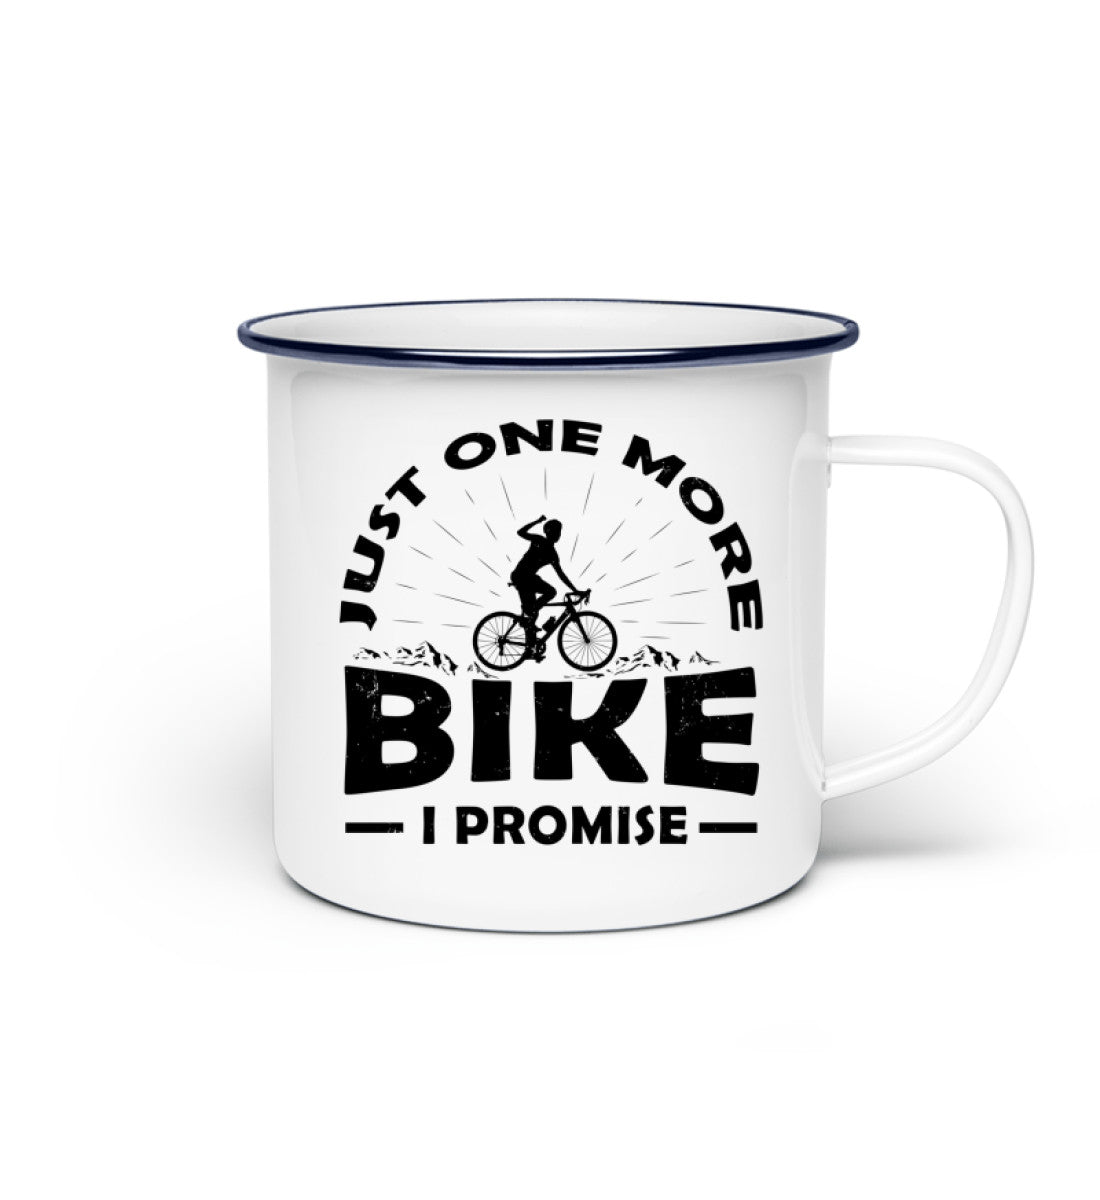 Just one more bike, i promise - Emaille Tasse fahrrad